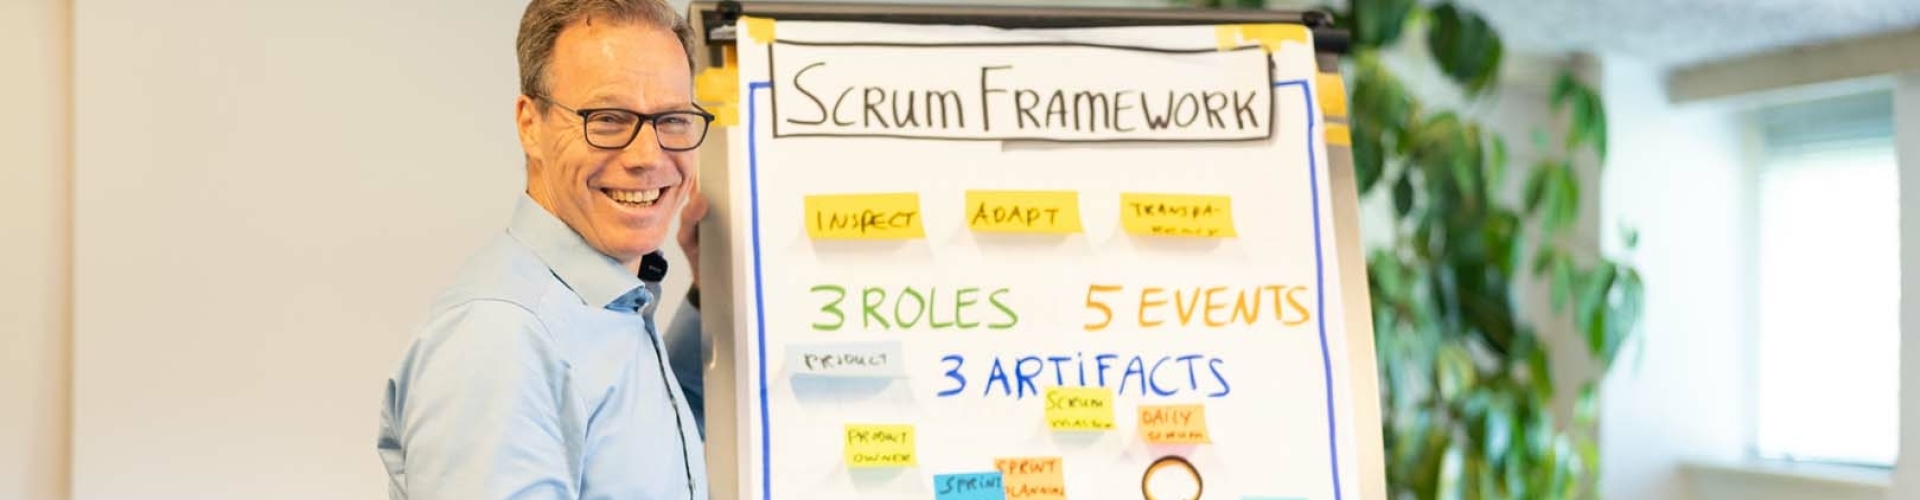 training scrum framework